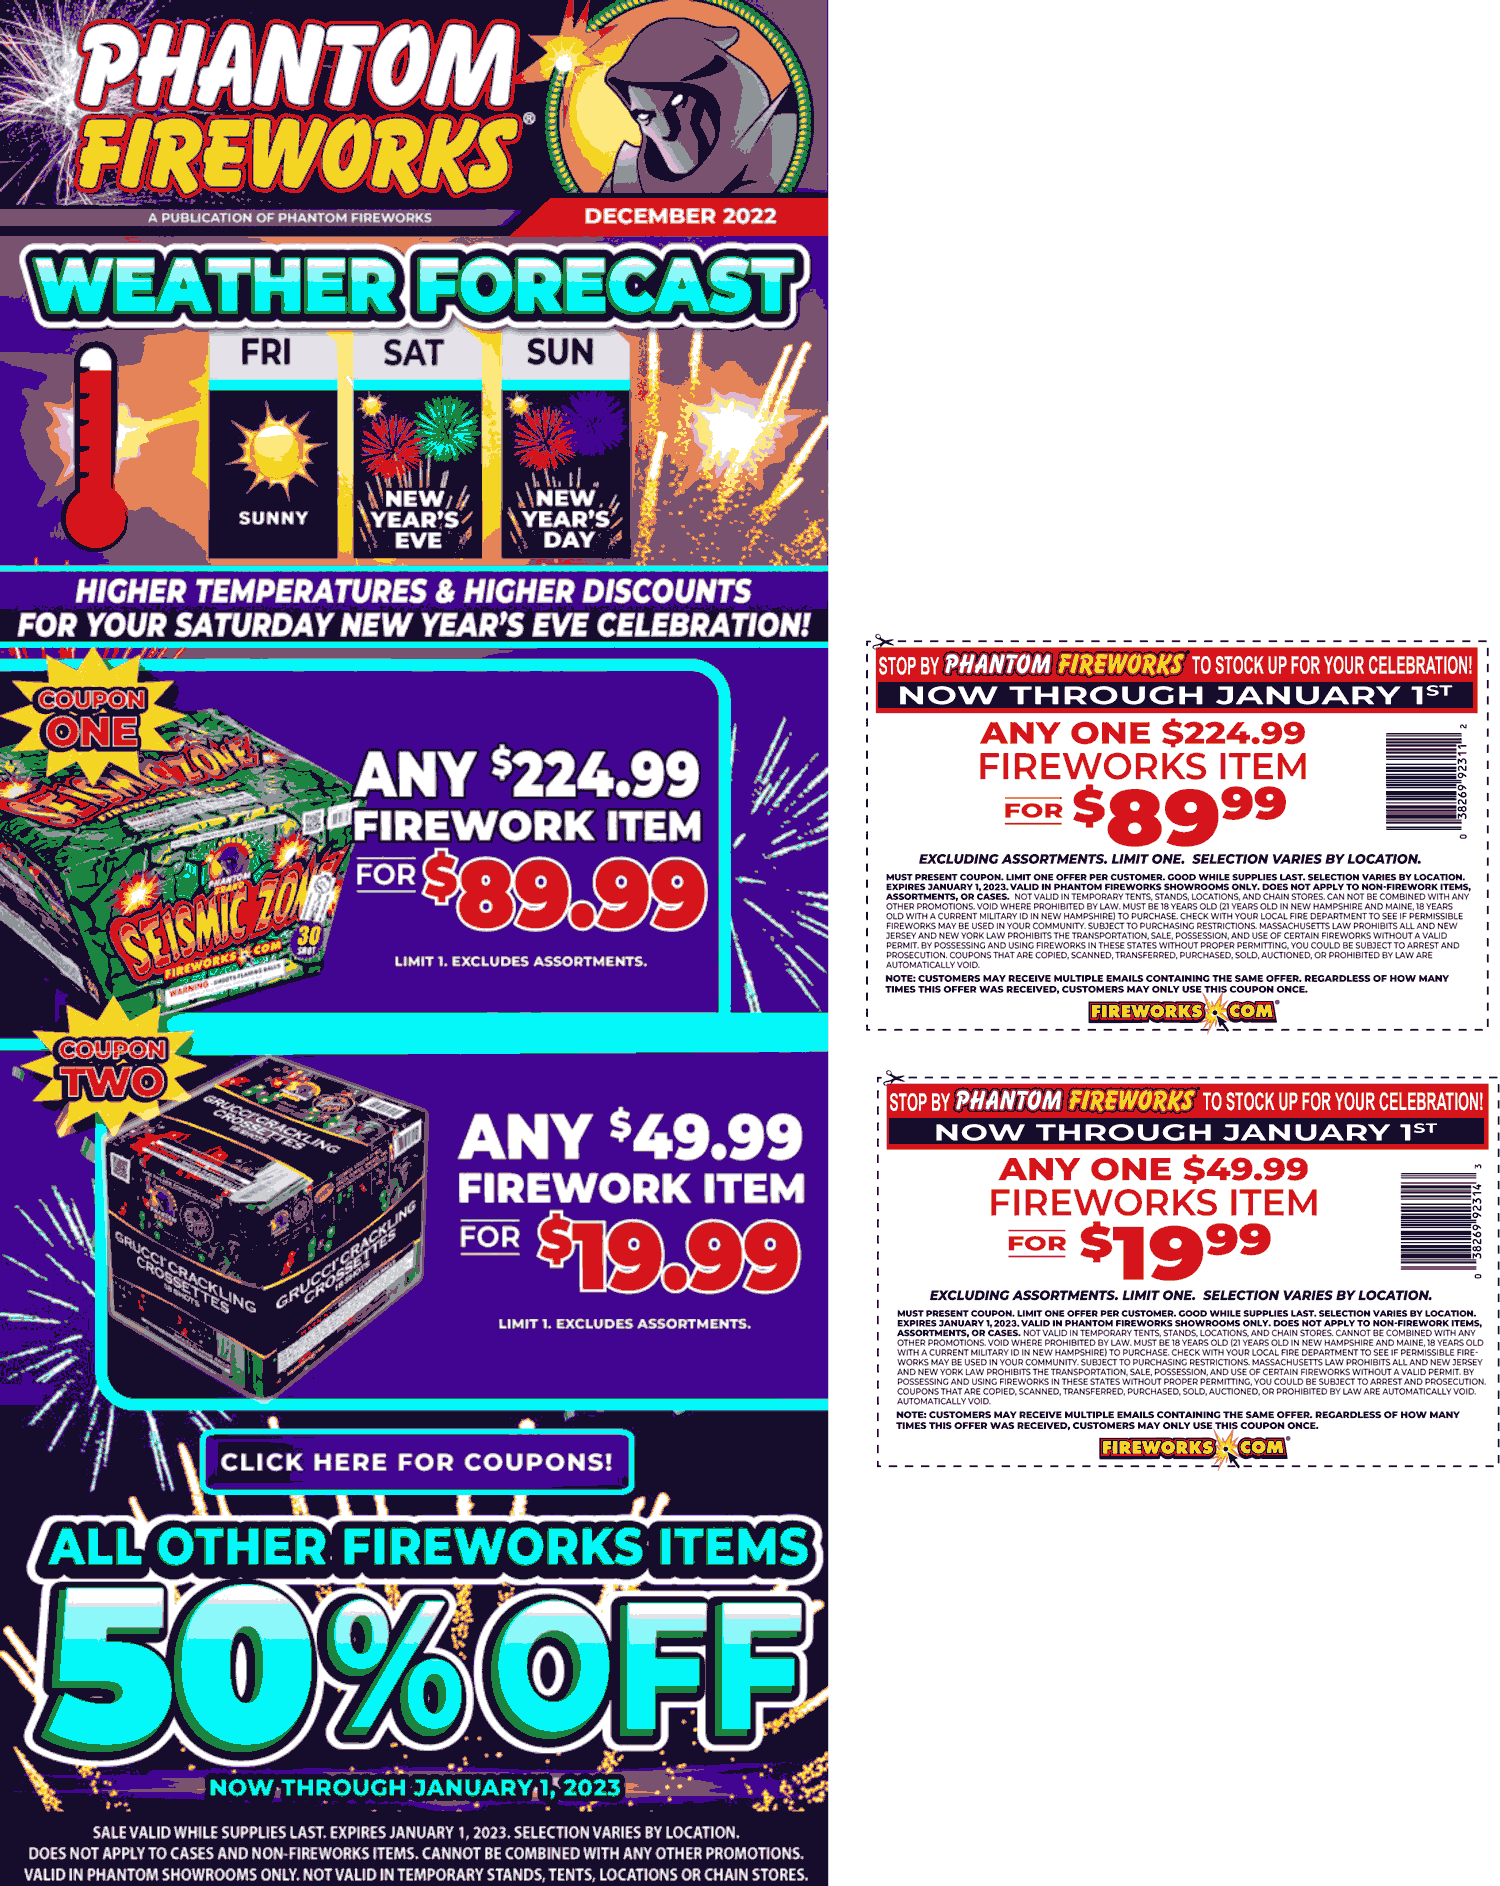 Phantom Fireworks coupons & promo code for [February 2023]